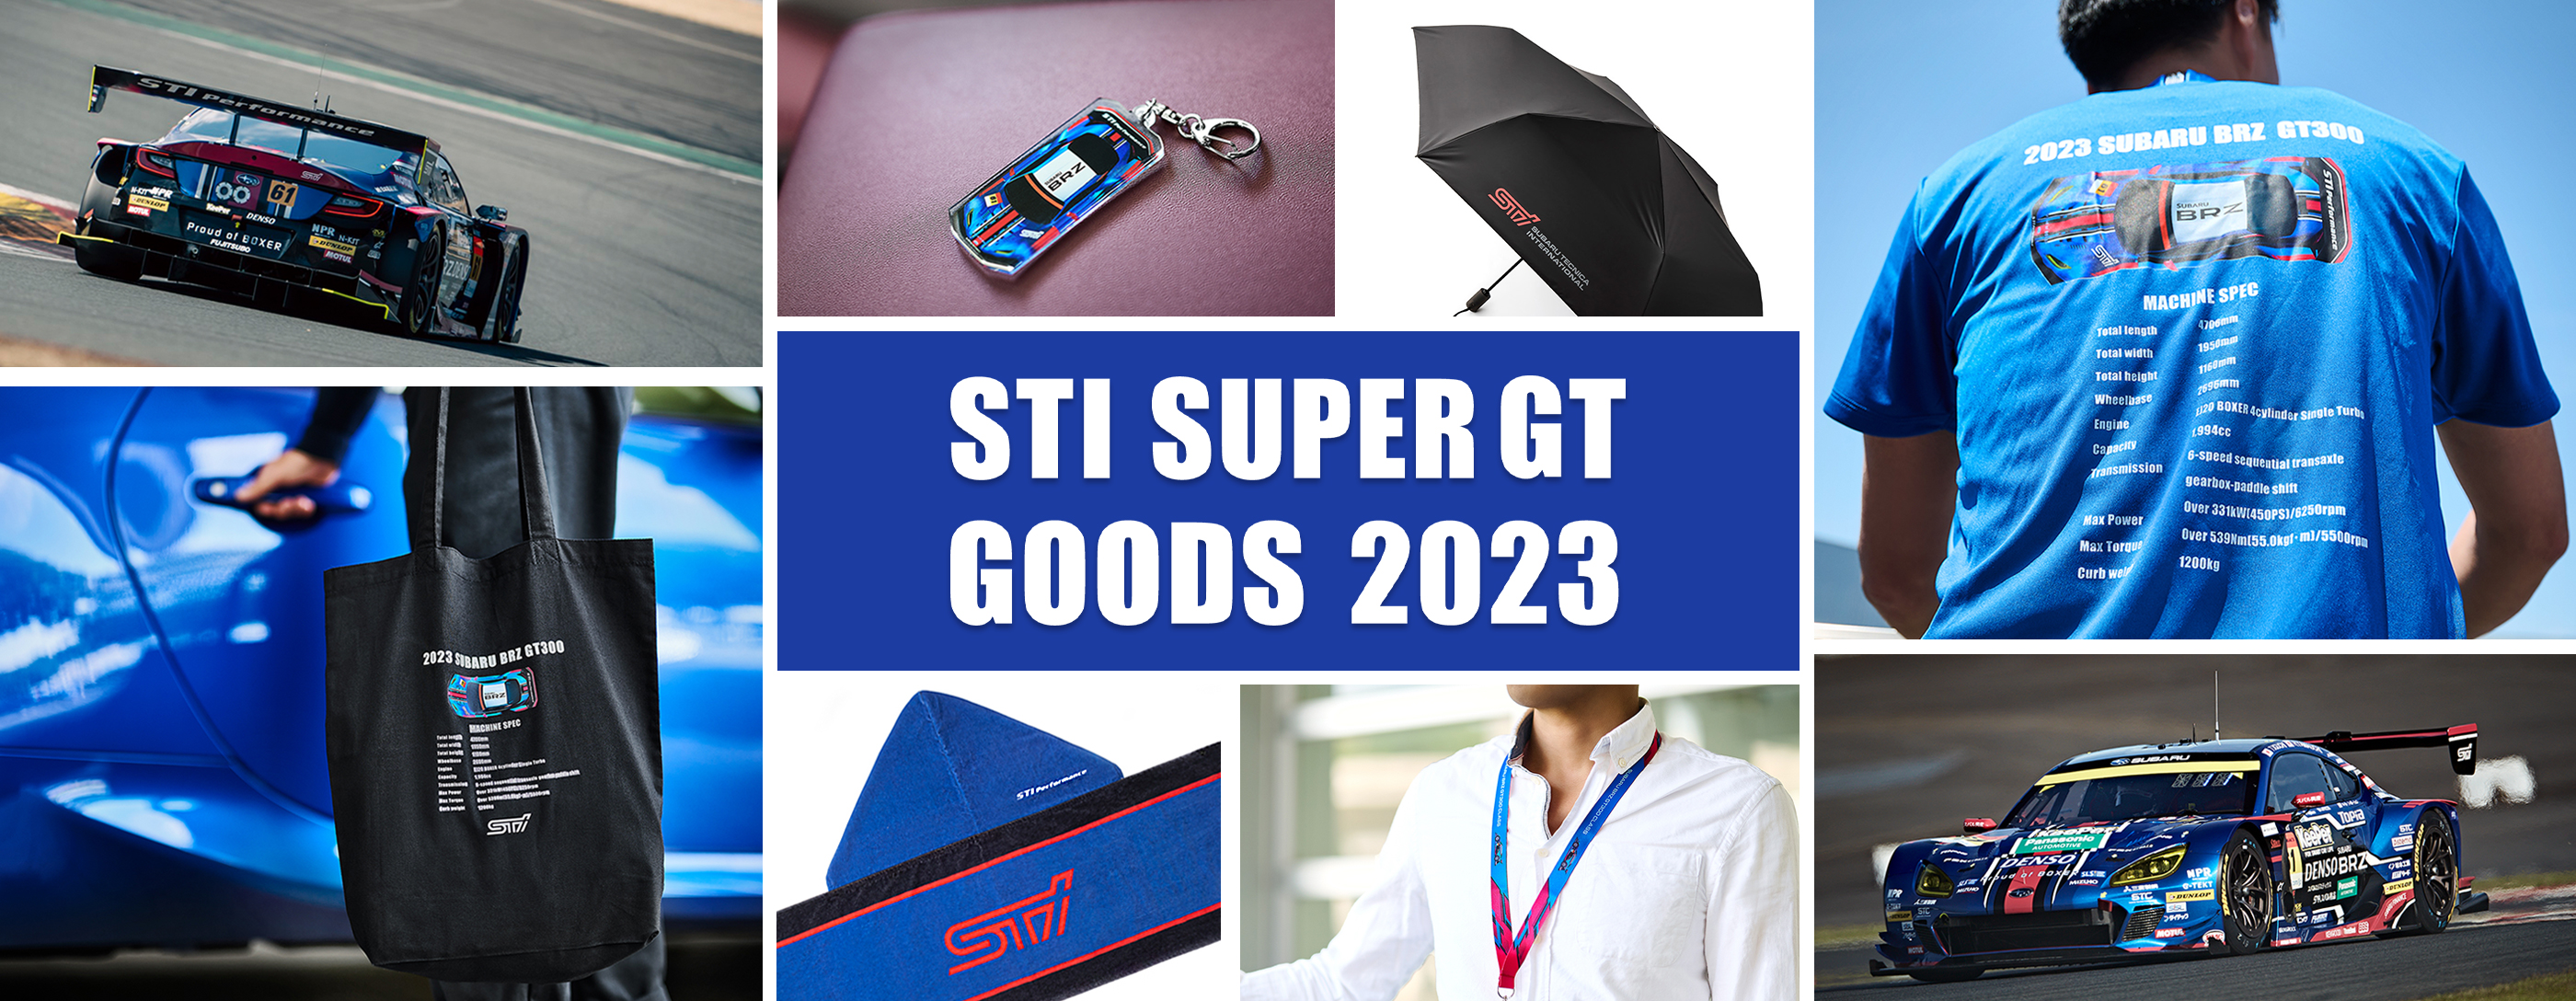 STI SUPER GT GOODS 2023